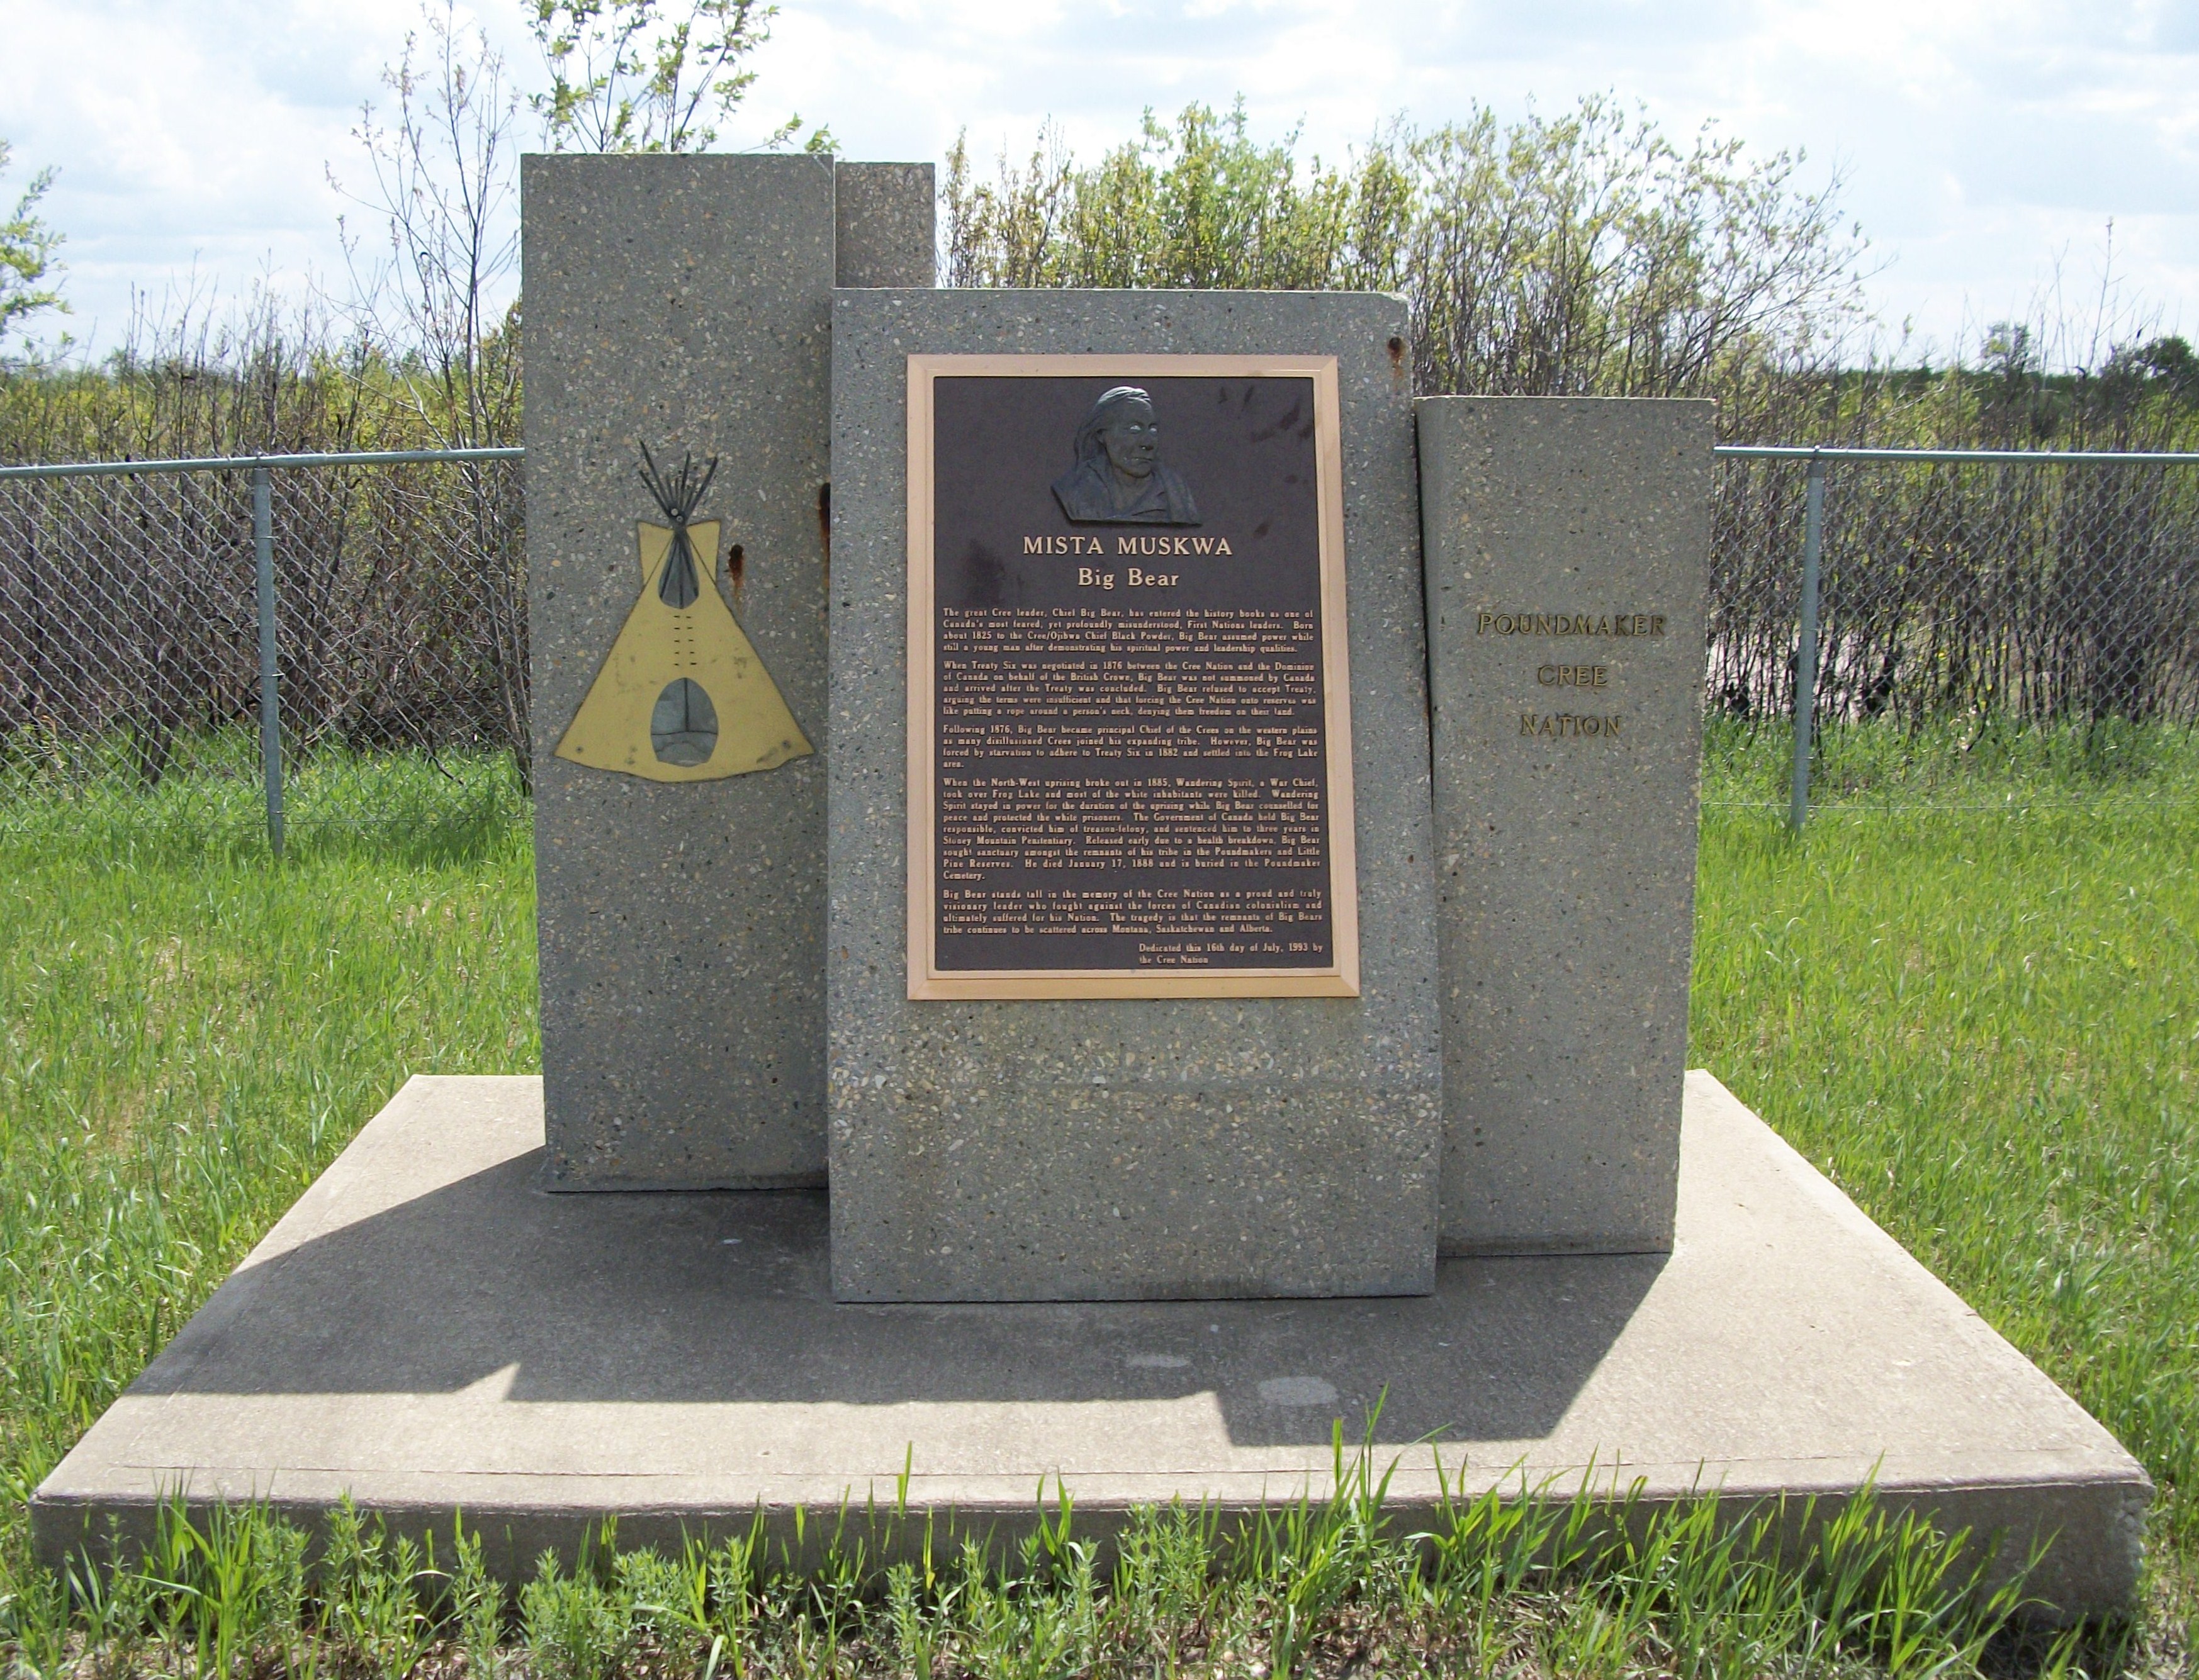 Mista Muskwa (Big Bear) monument on the Poundmaker Cree Nation